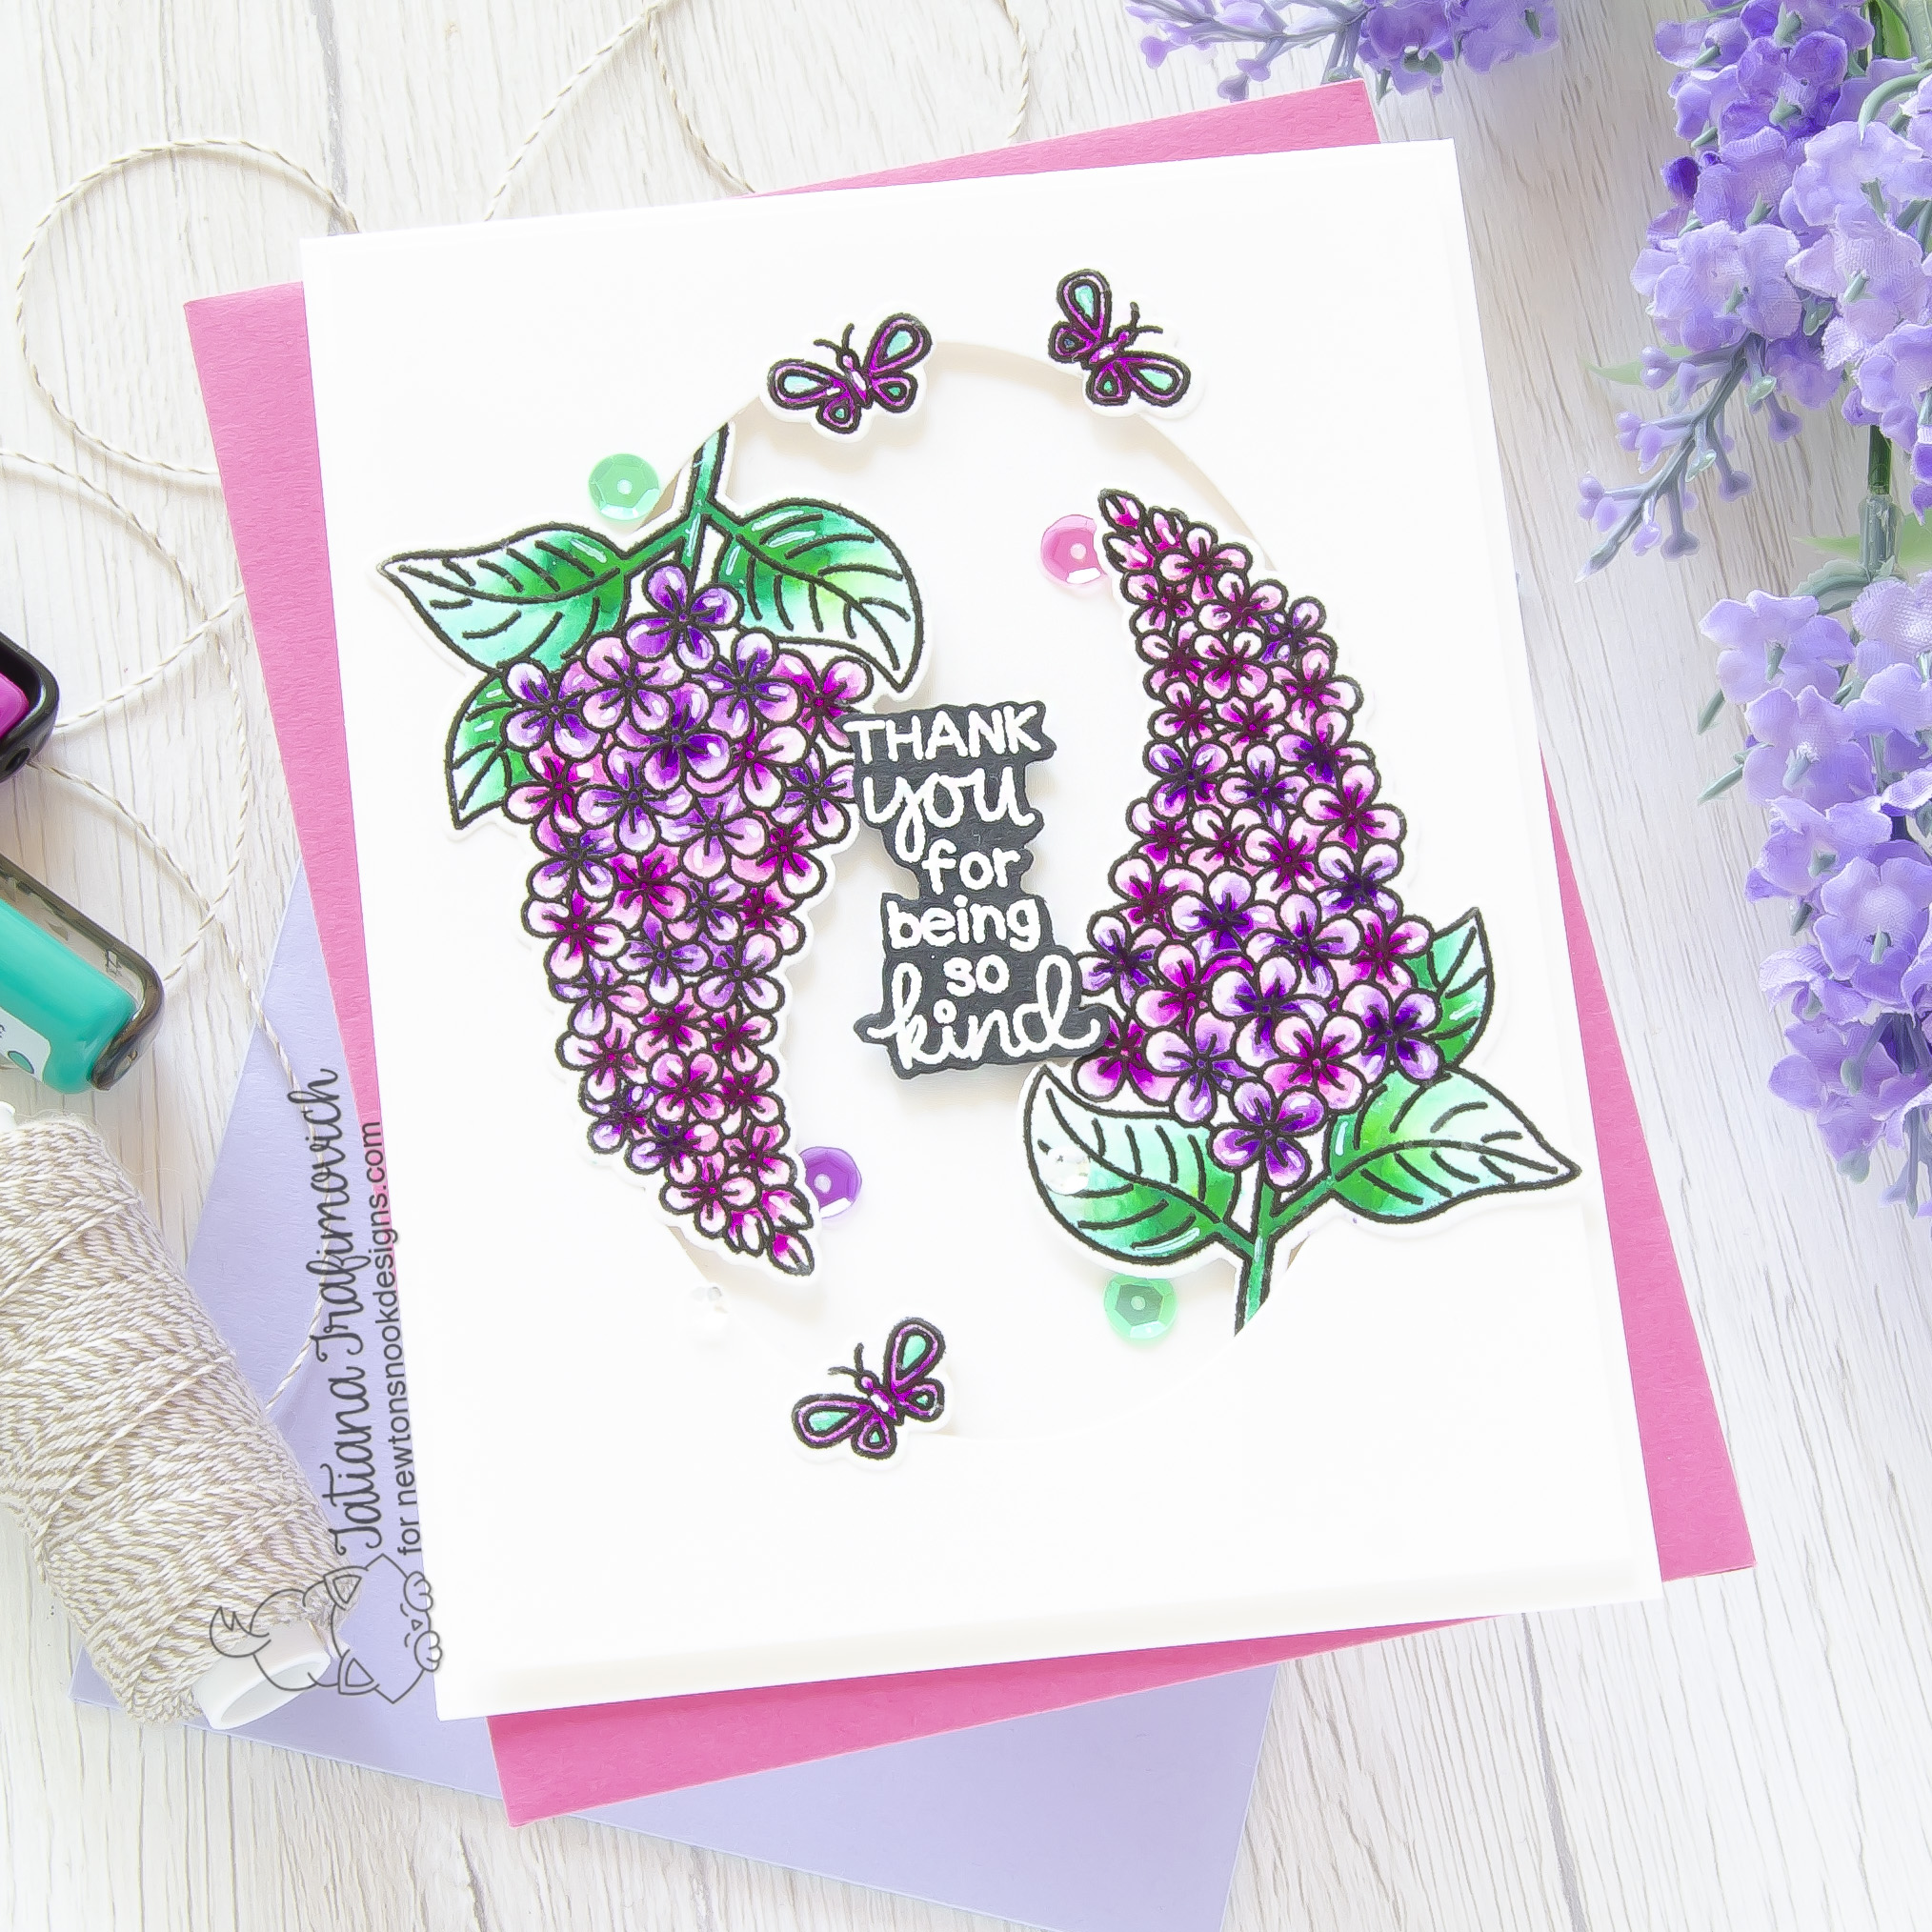 Thank You #handmade card by Tatiana Trafimovich #tatianacraftandart - Lilac stamp set by Newton's Nook Designs #newtonsnook